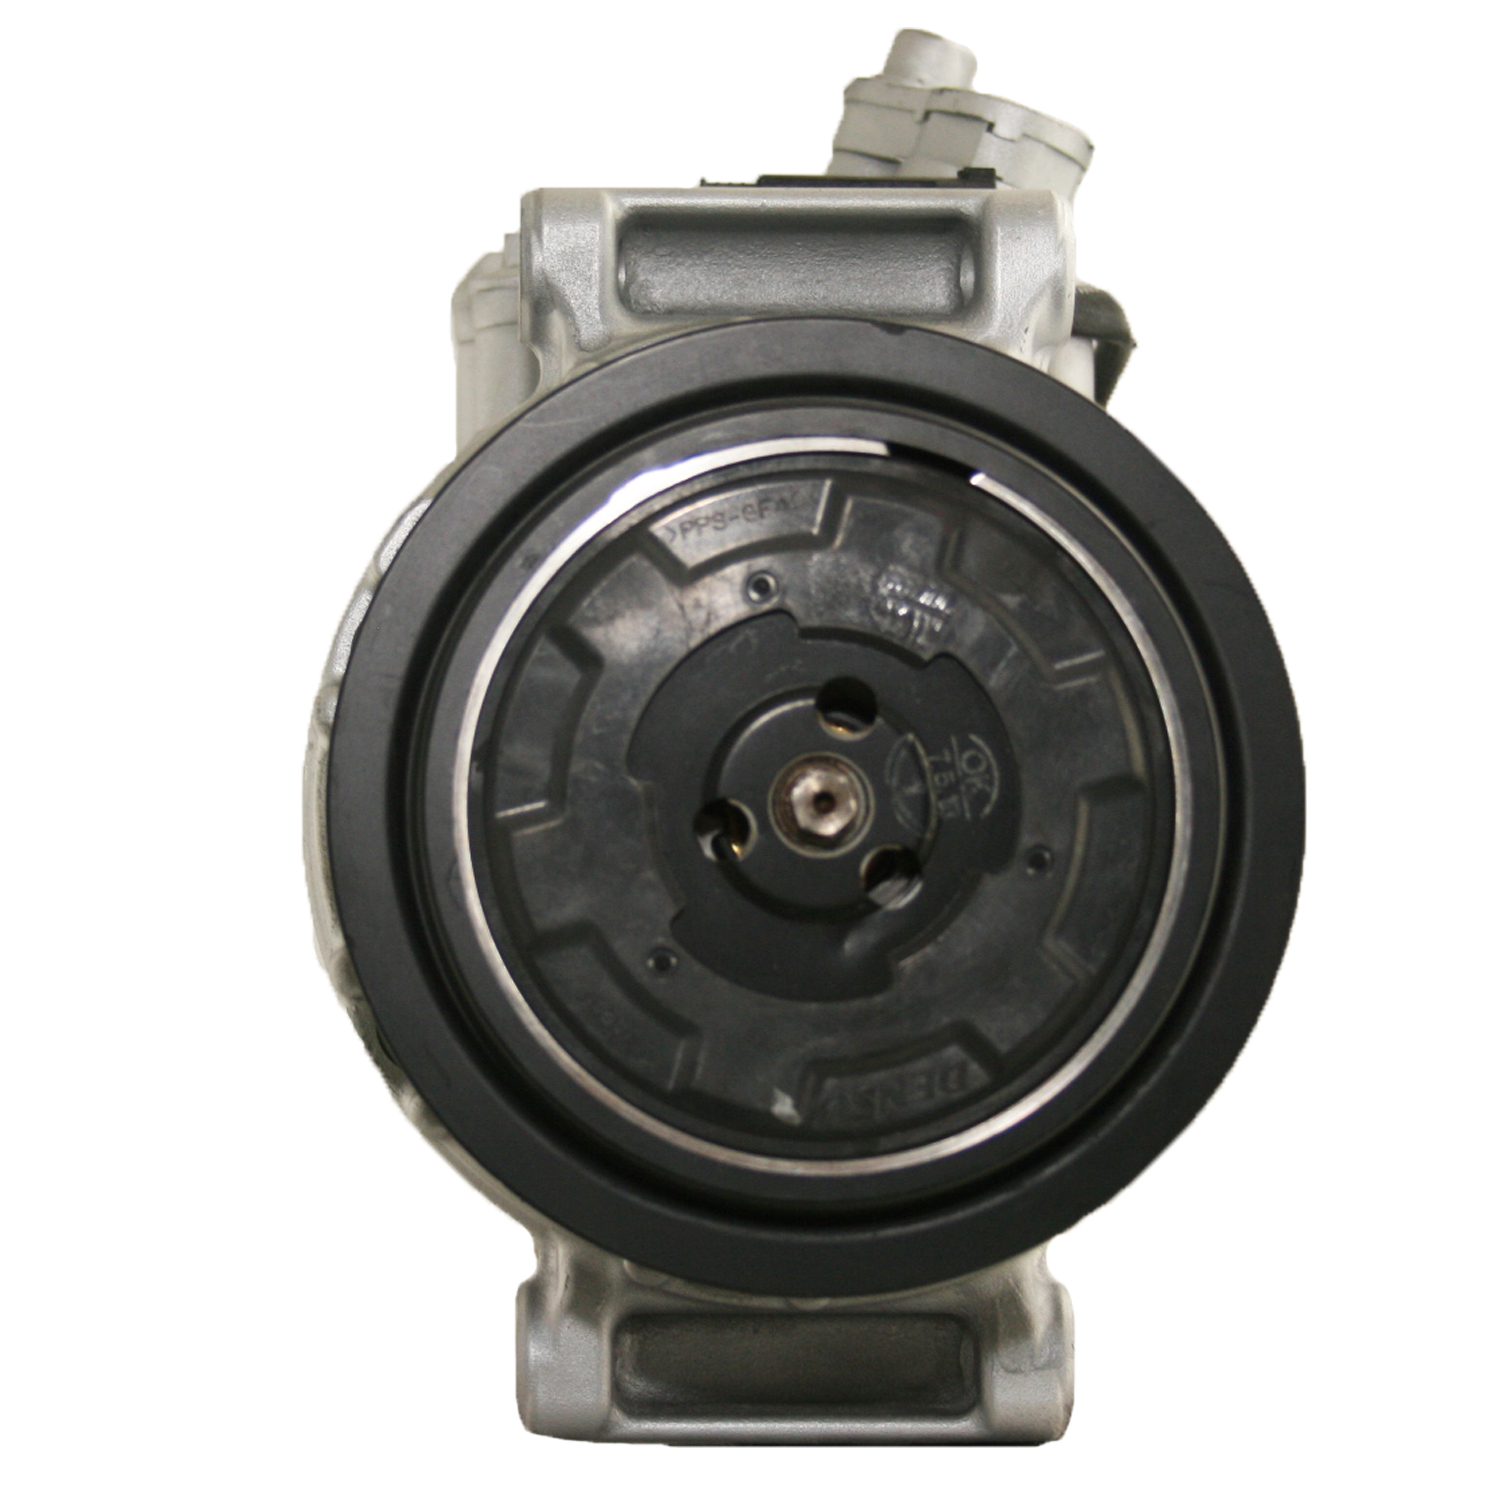 TCW Compressor 31730.601 Remanufactured Product Image field_60b6a13a6e67c